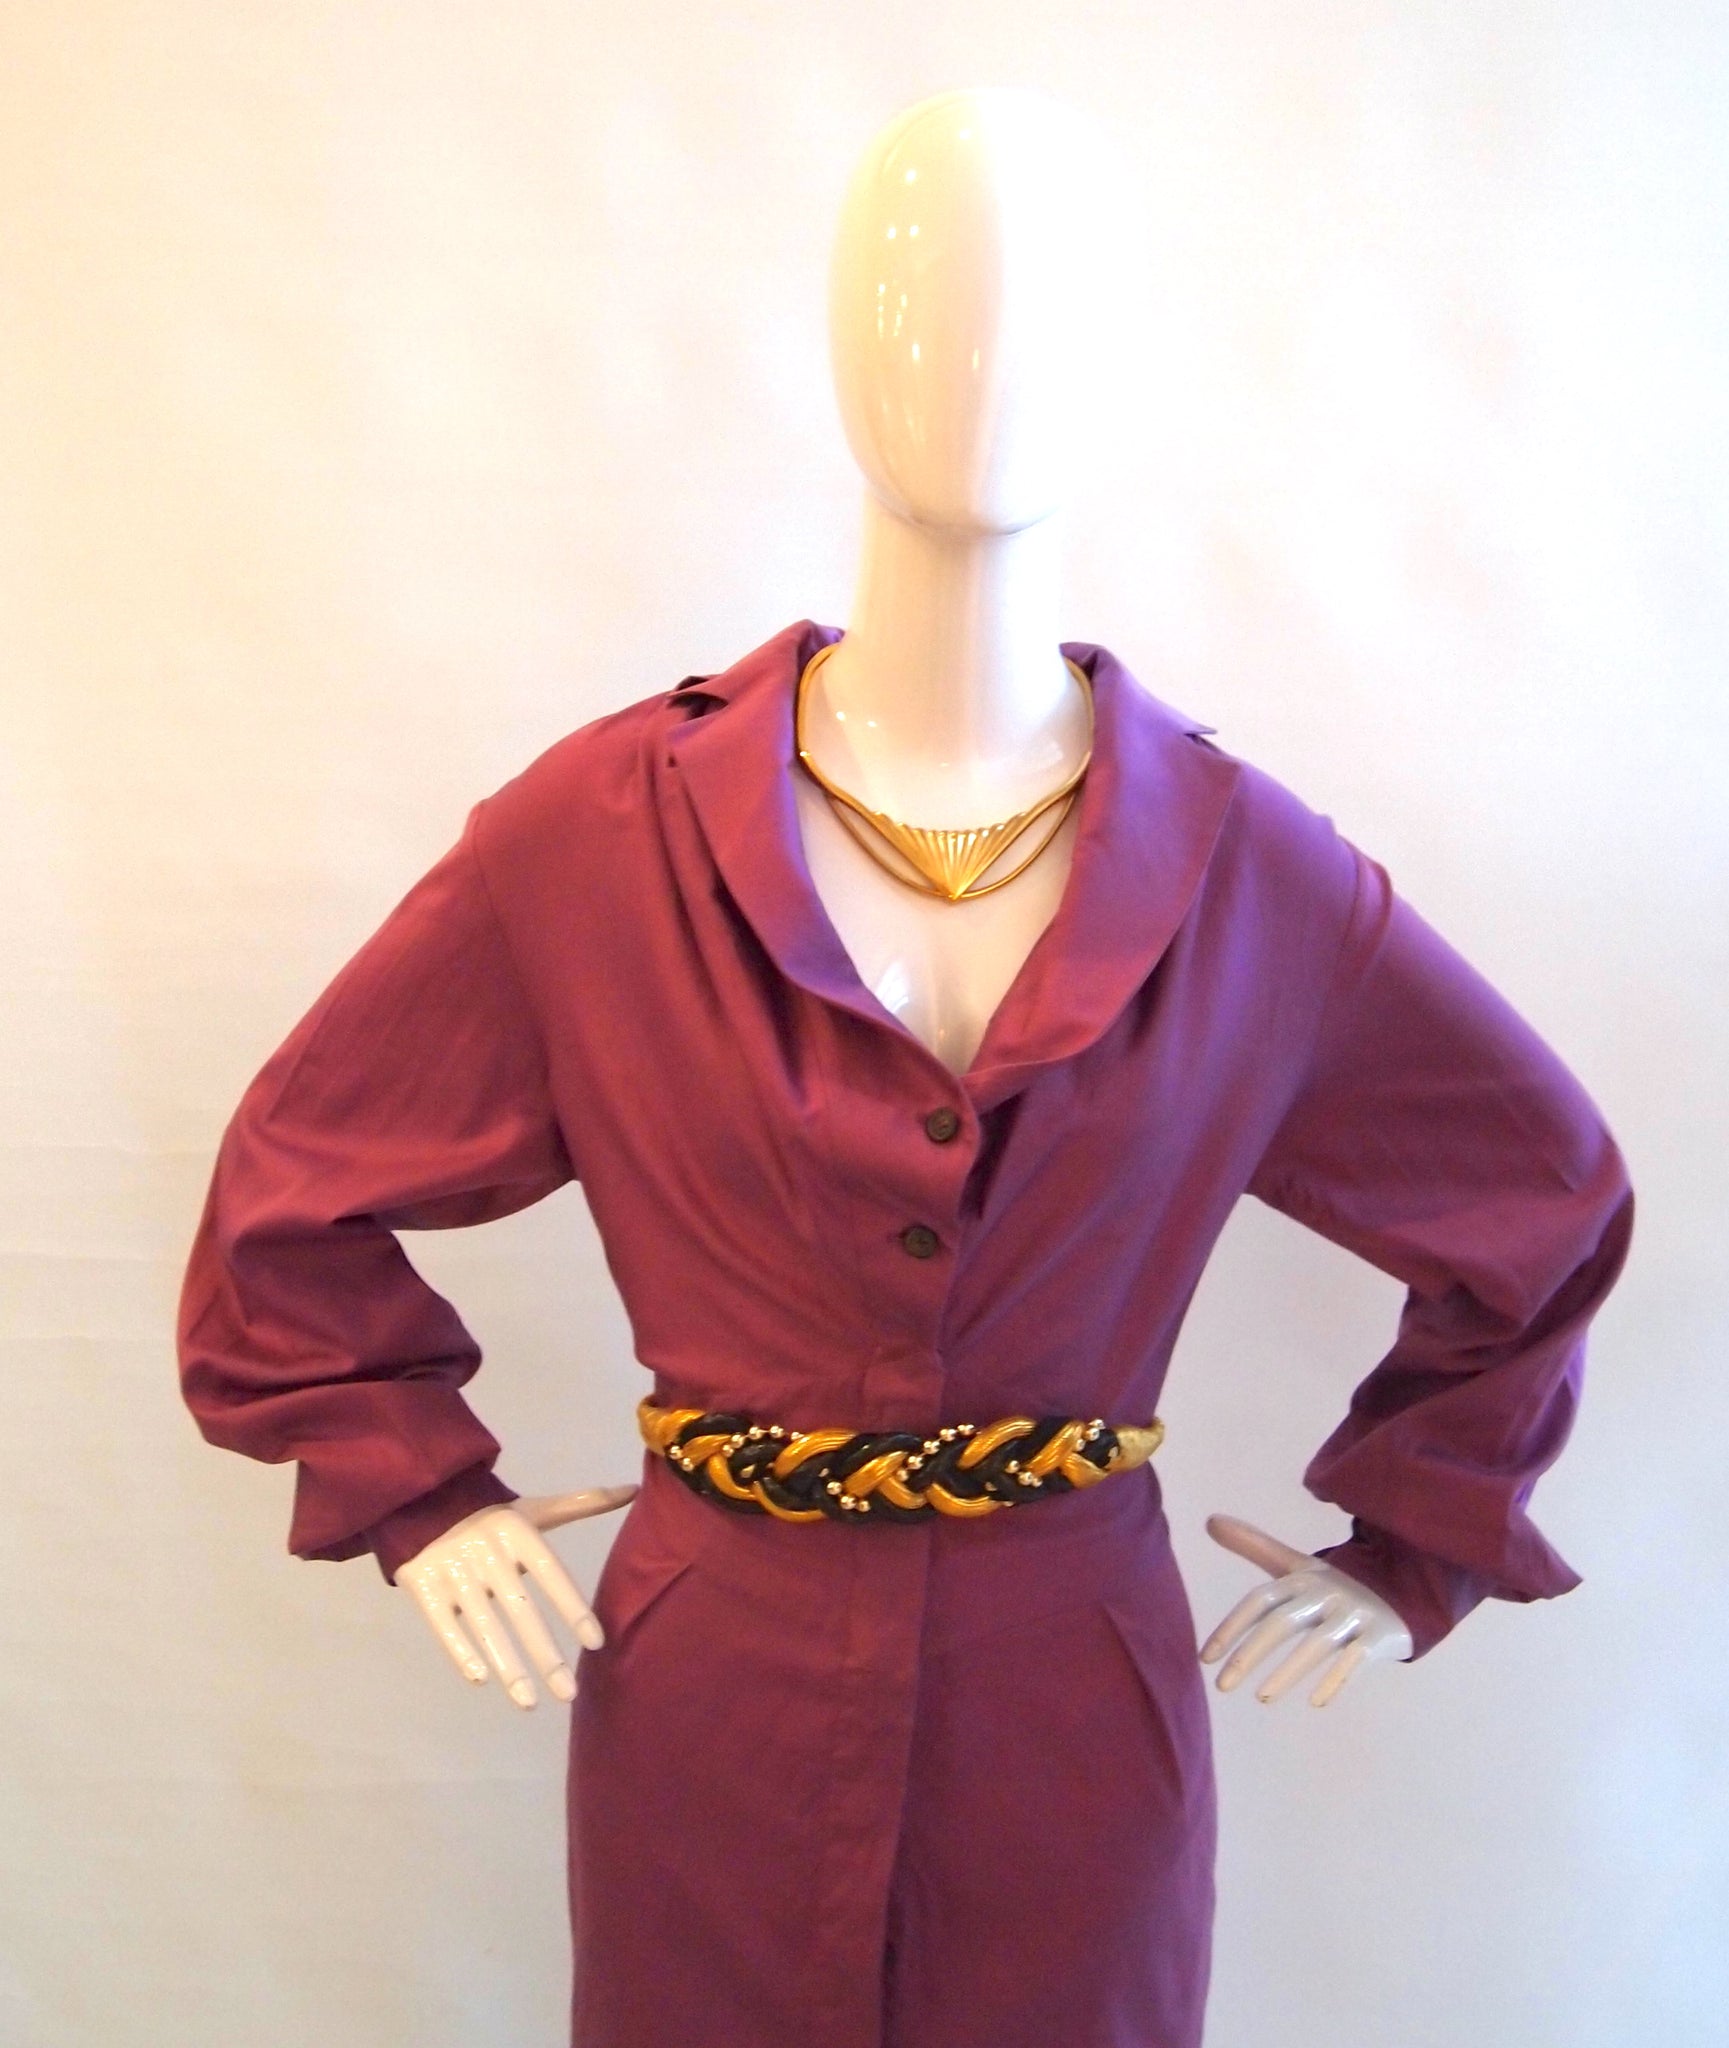 Vintage Vivienne Westwood aubergine purple dress with cool neckline (new w tag)